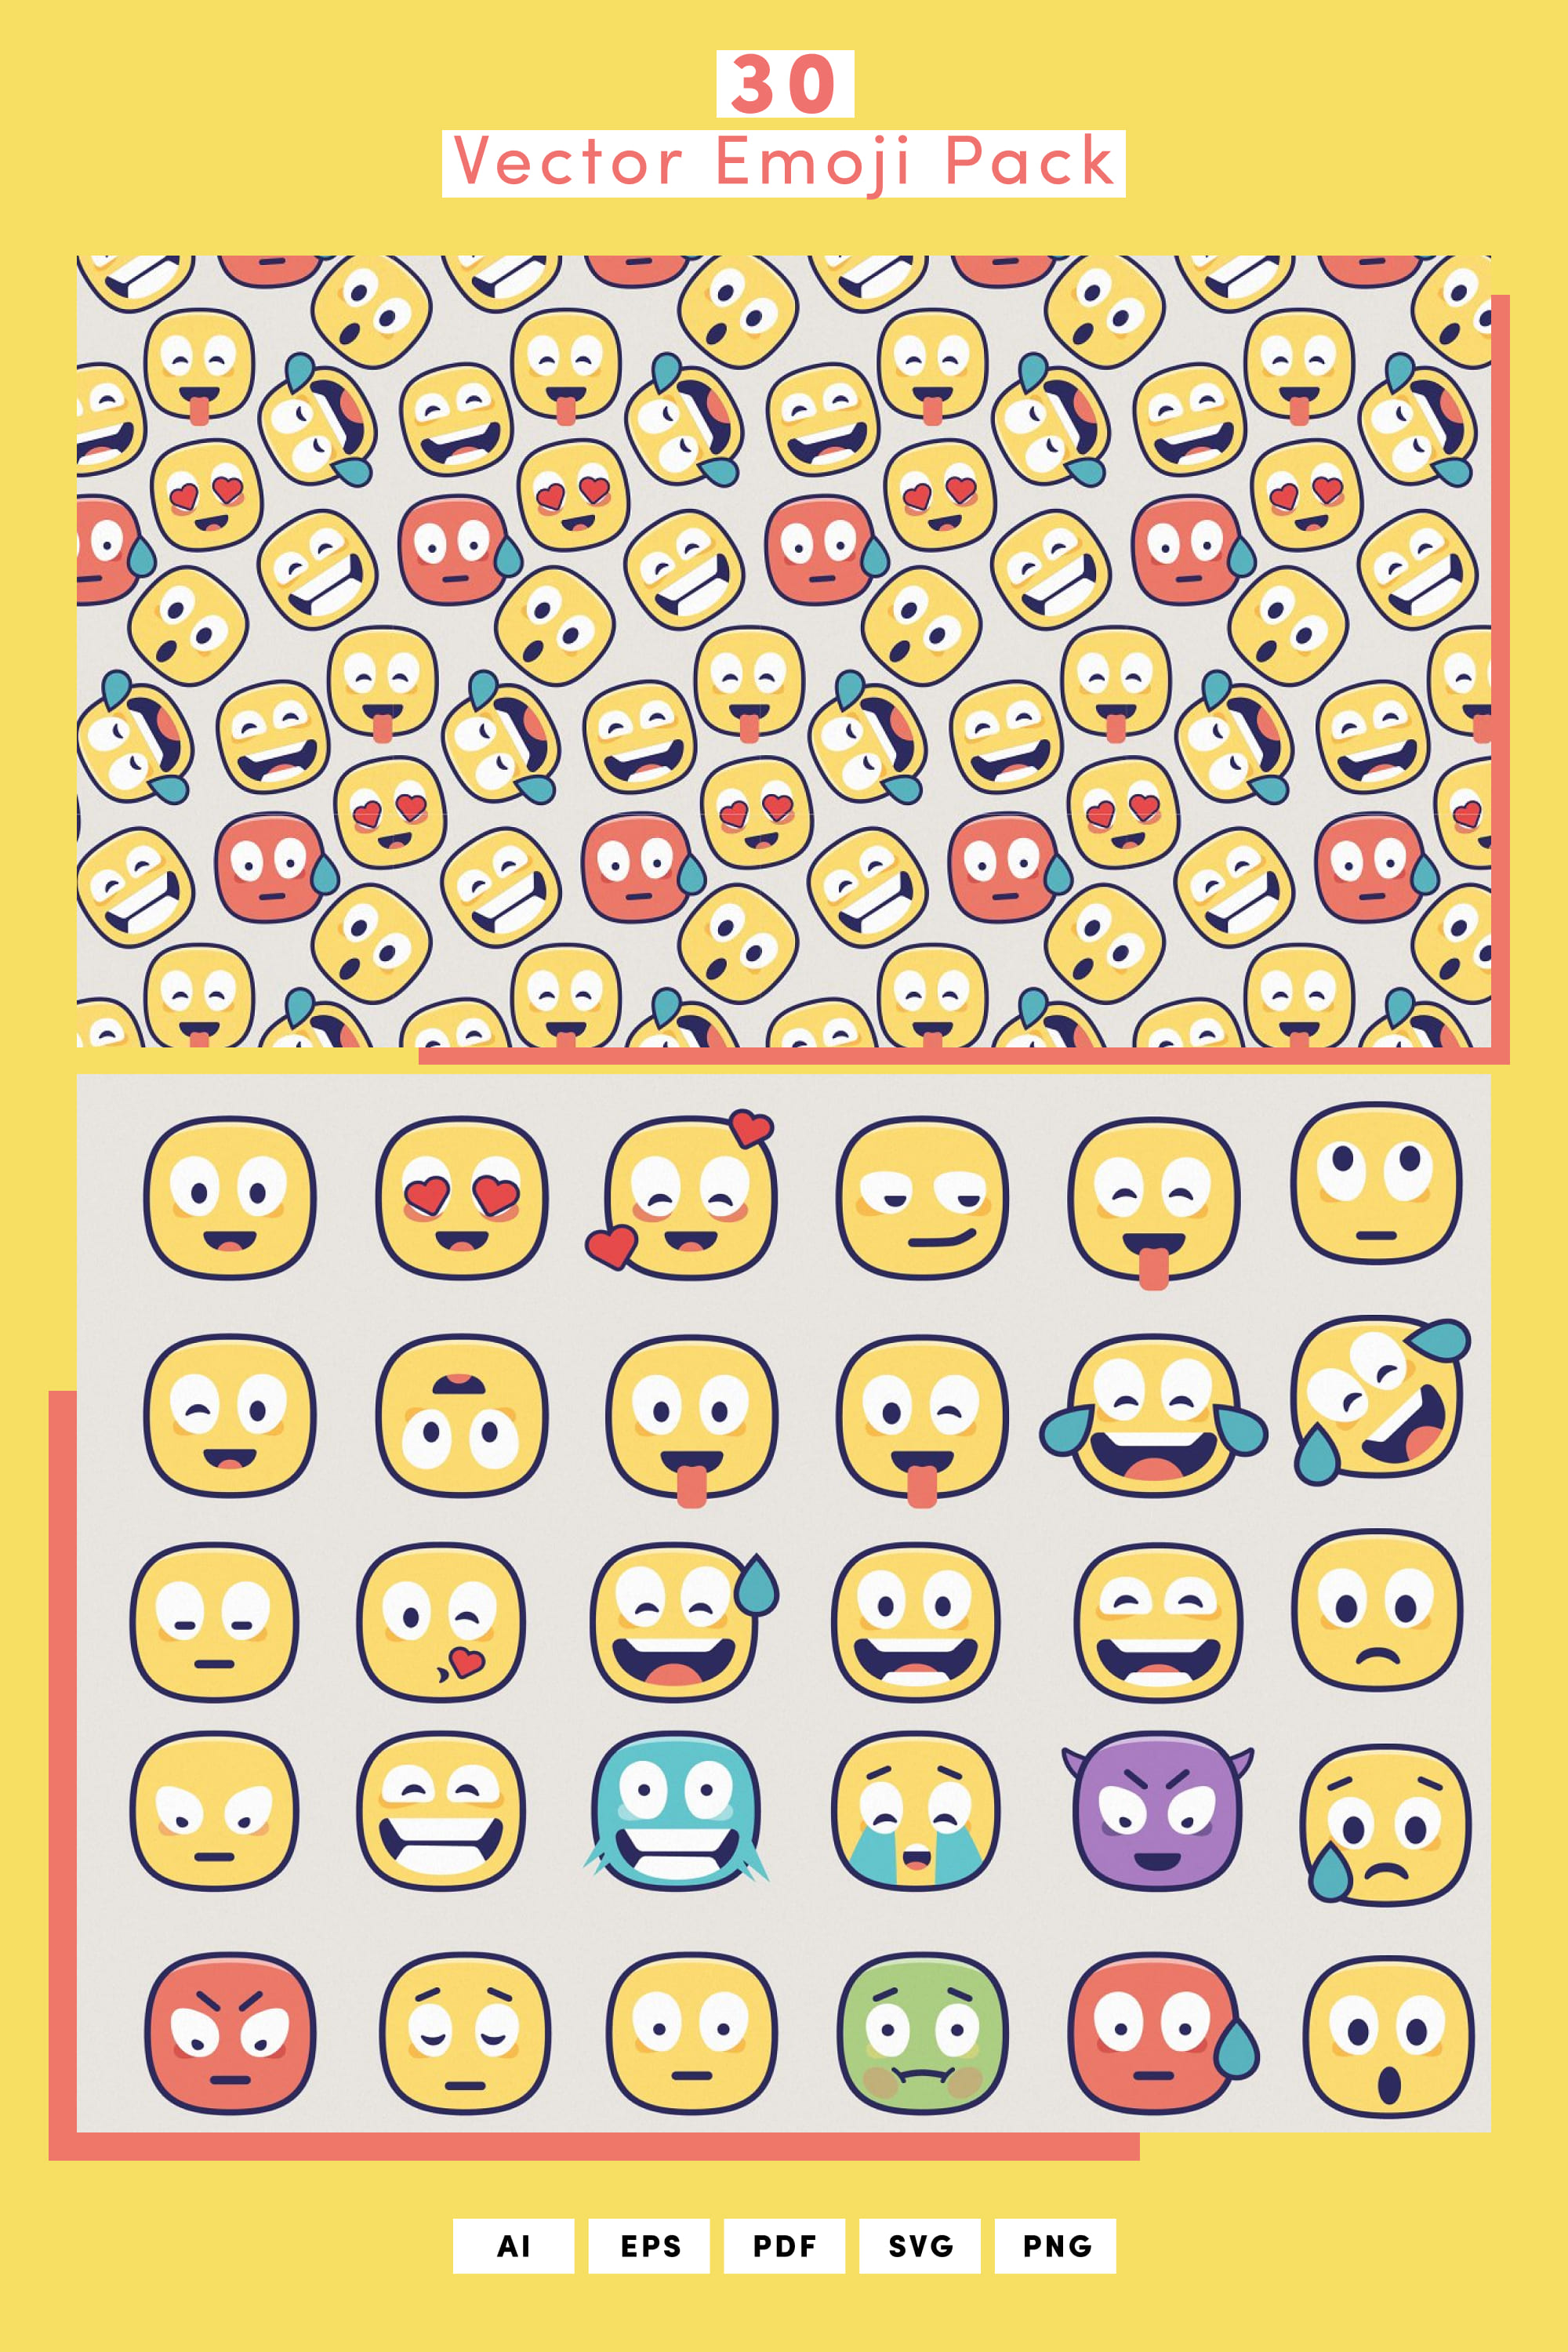 Vector Emoji Pack Pinterest.